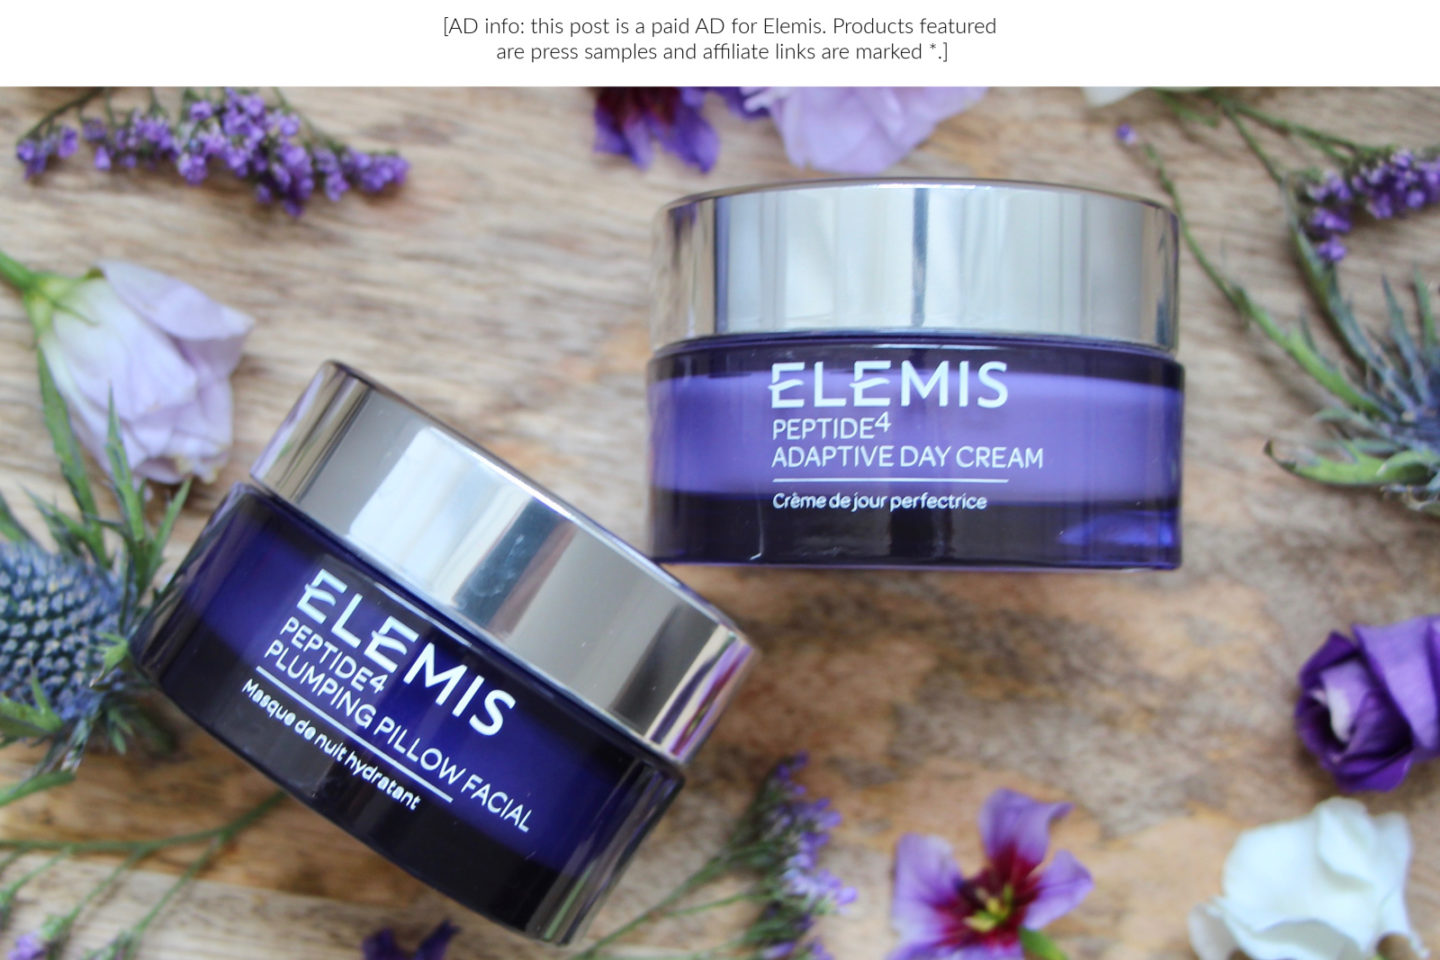 Elemis Peptide 24/7: Round-the-Clock Skincare | AD